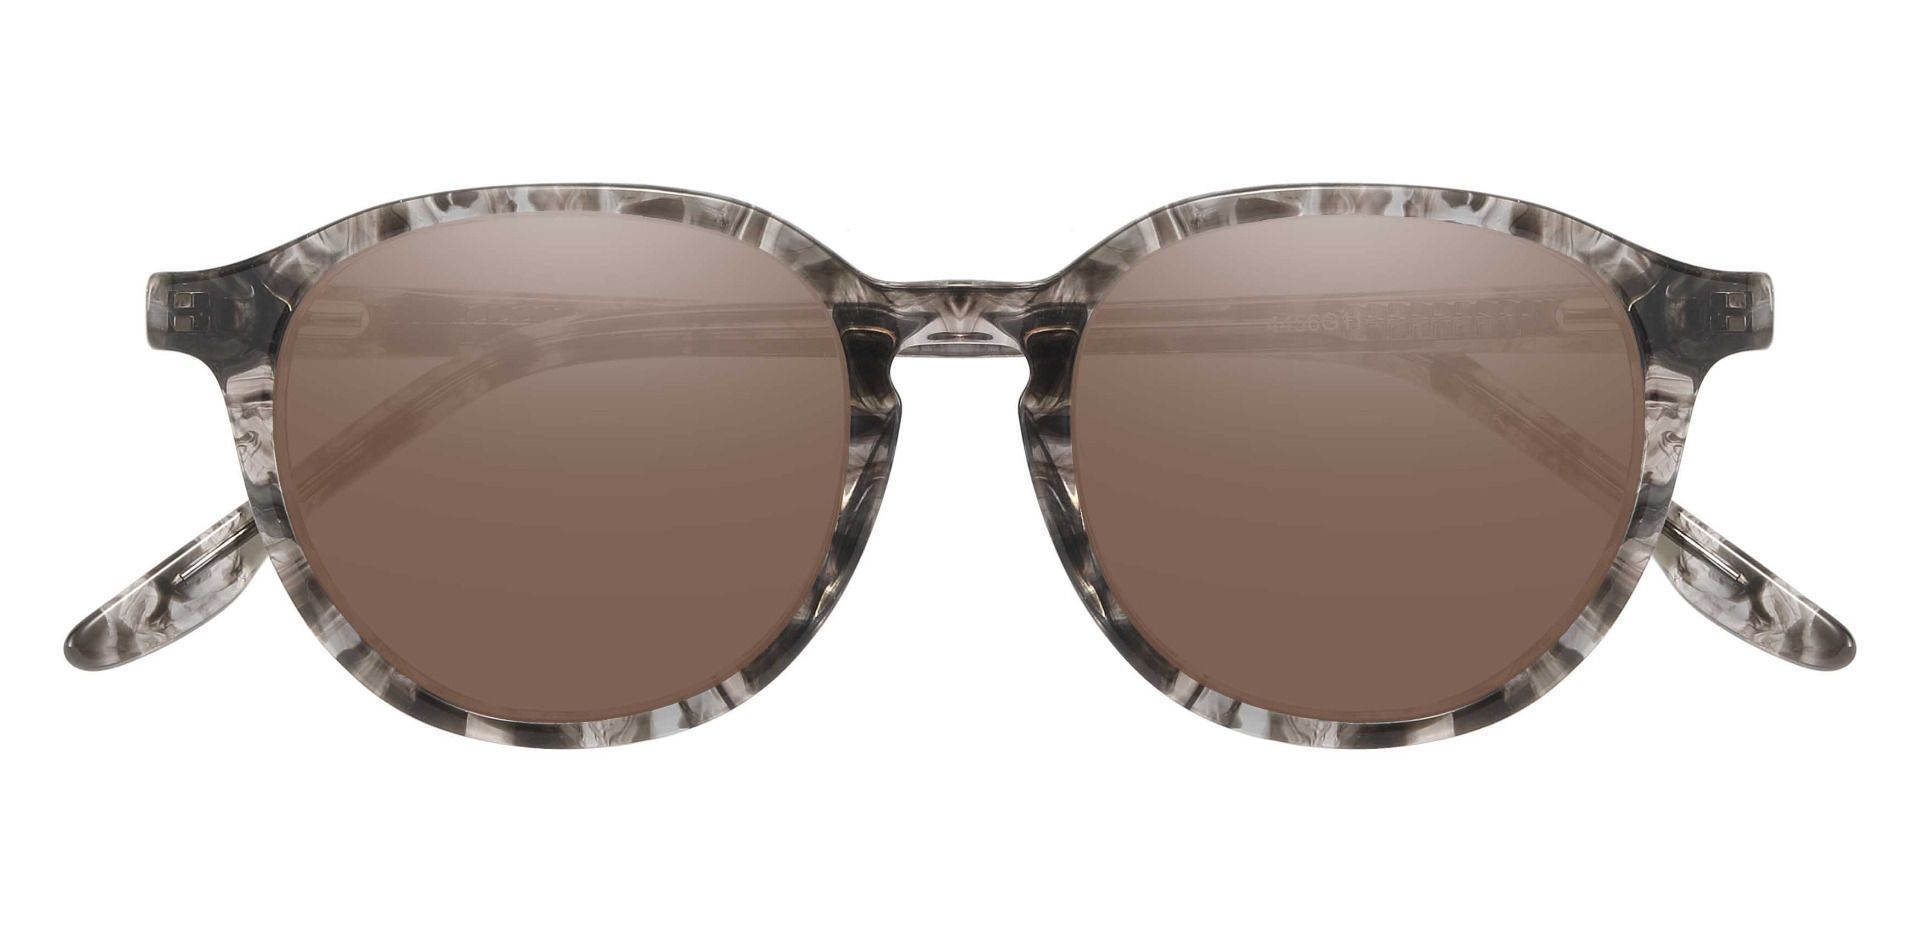 Ashley Oval Prescription Sunglasses - Gray Frame With Brown Lenses